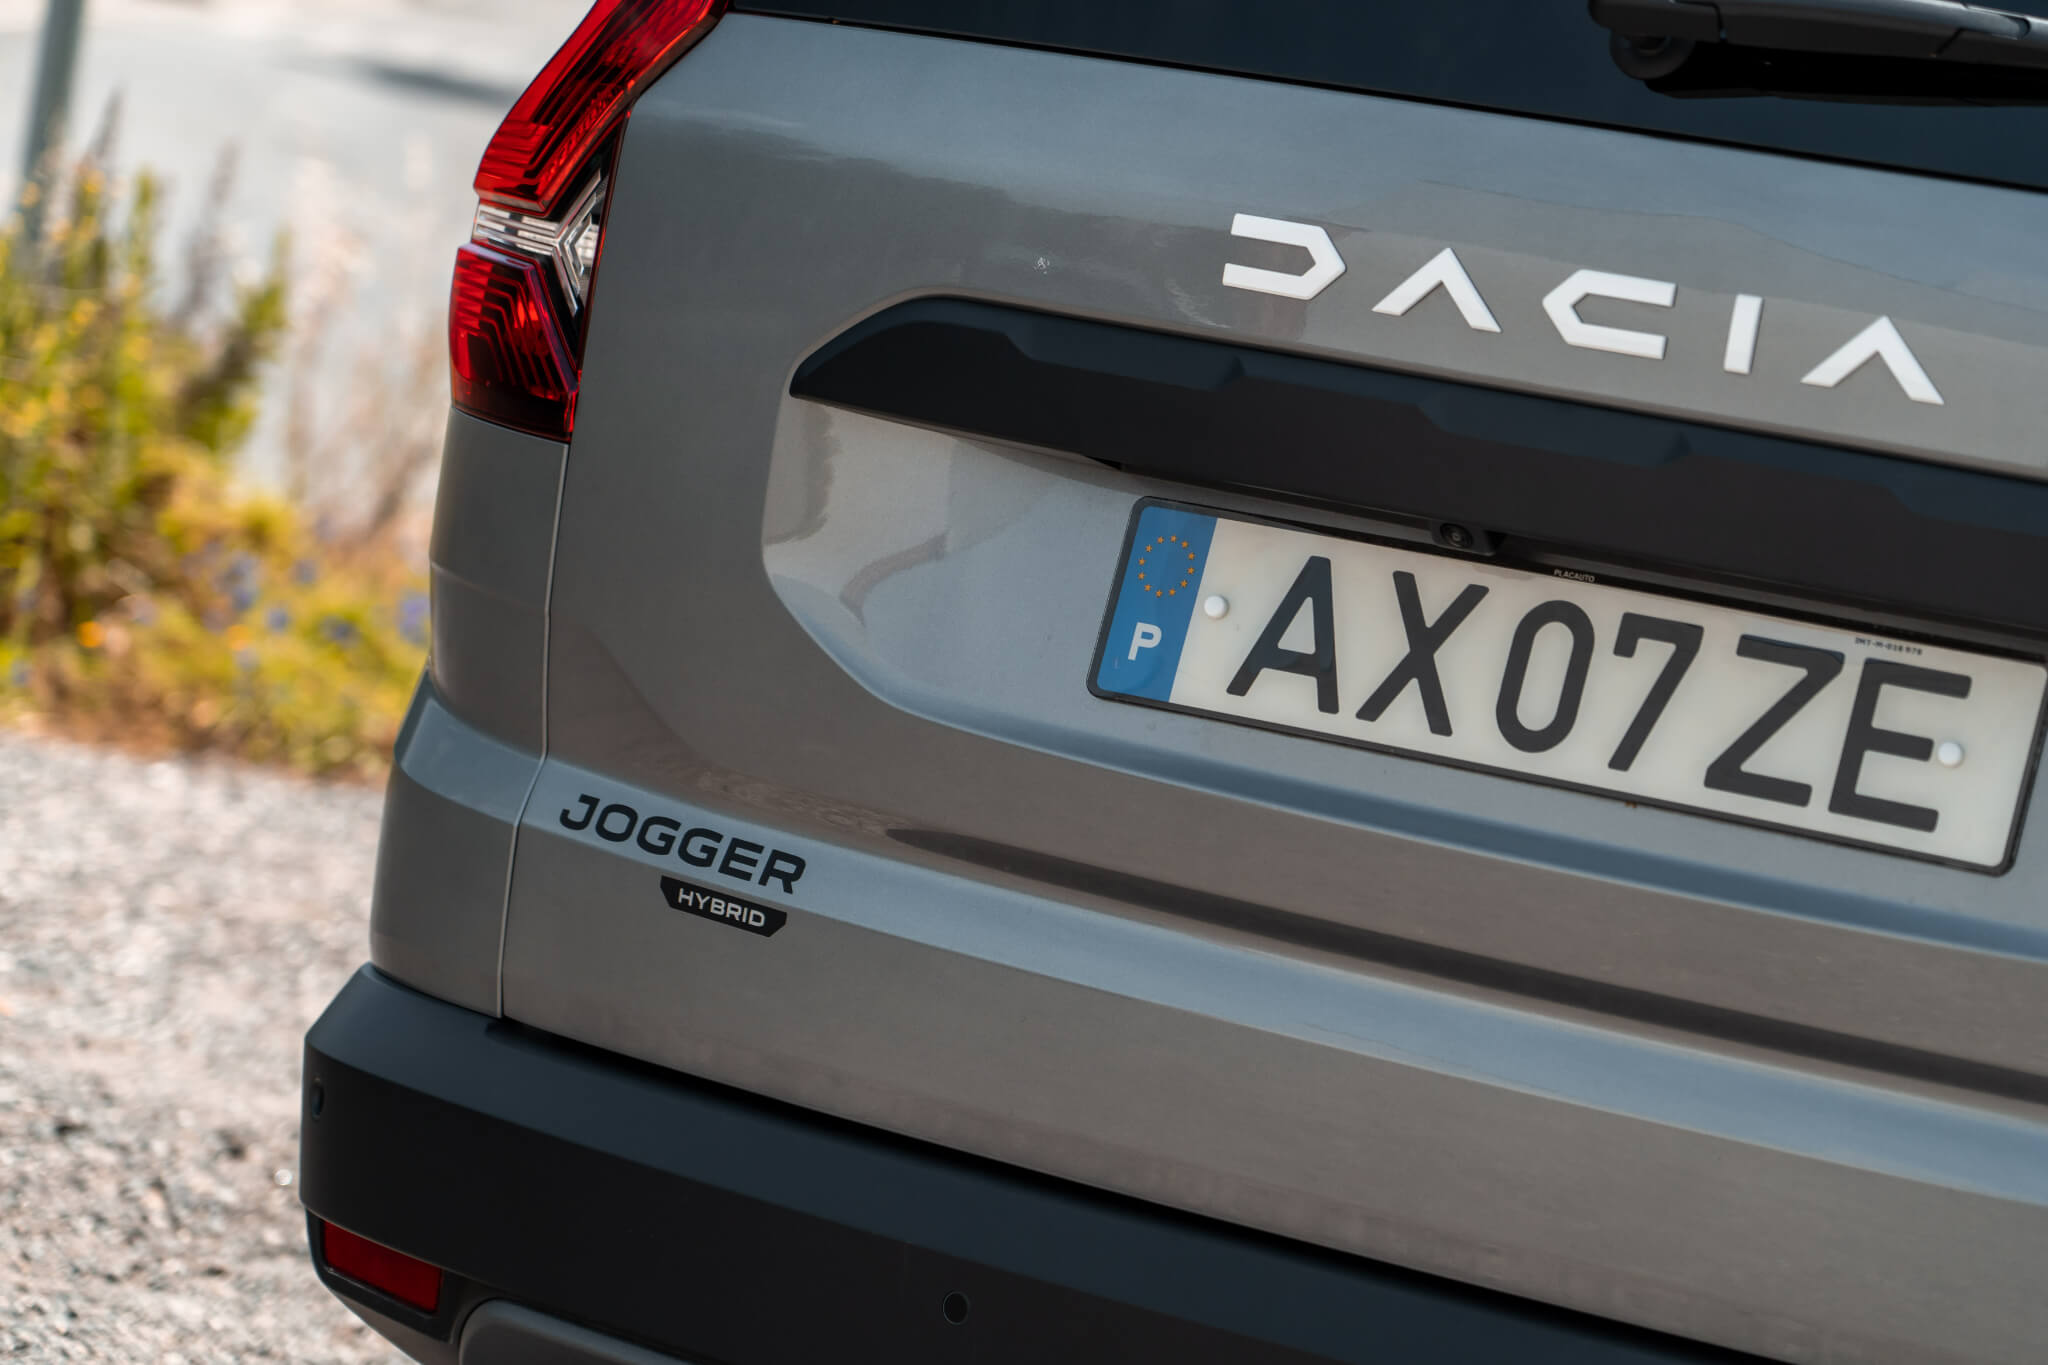 Dacia Jogger Hybrid logótipo